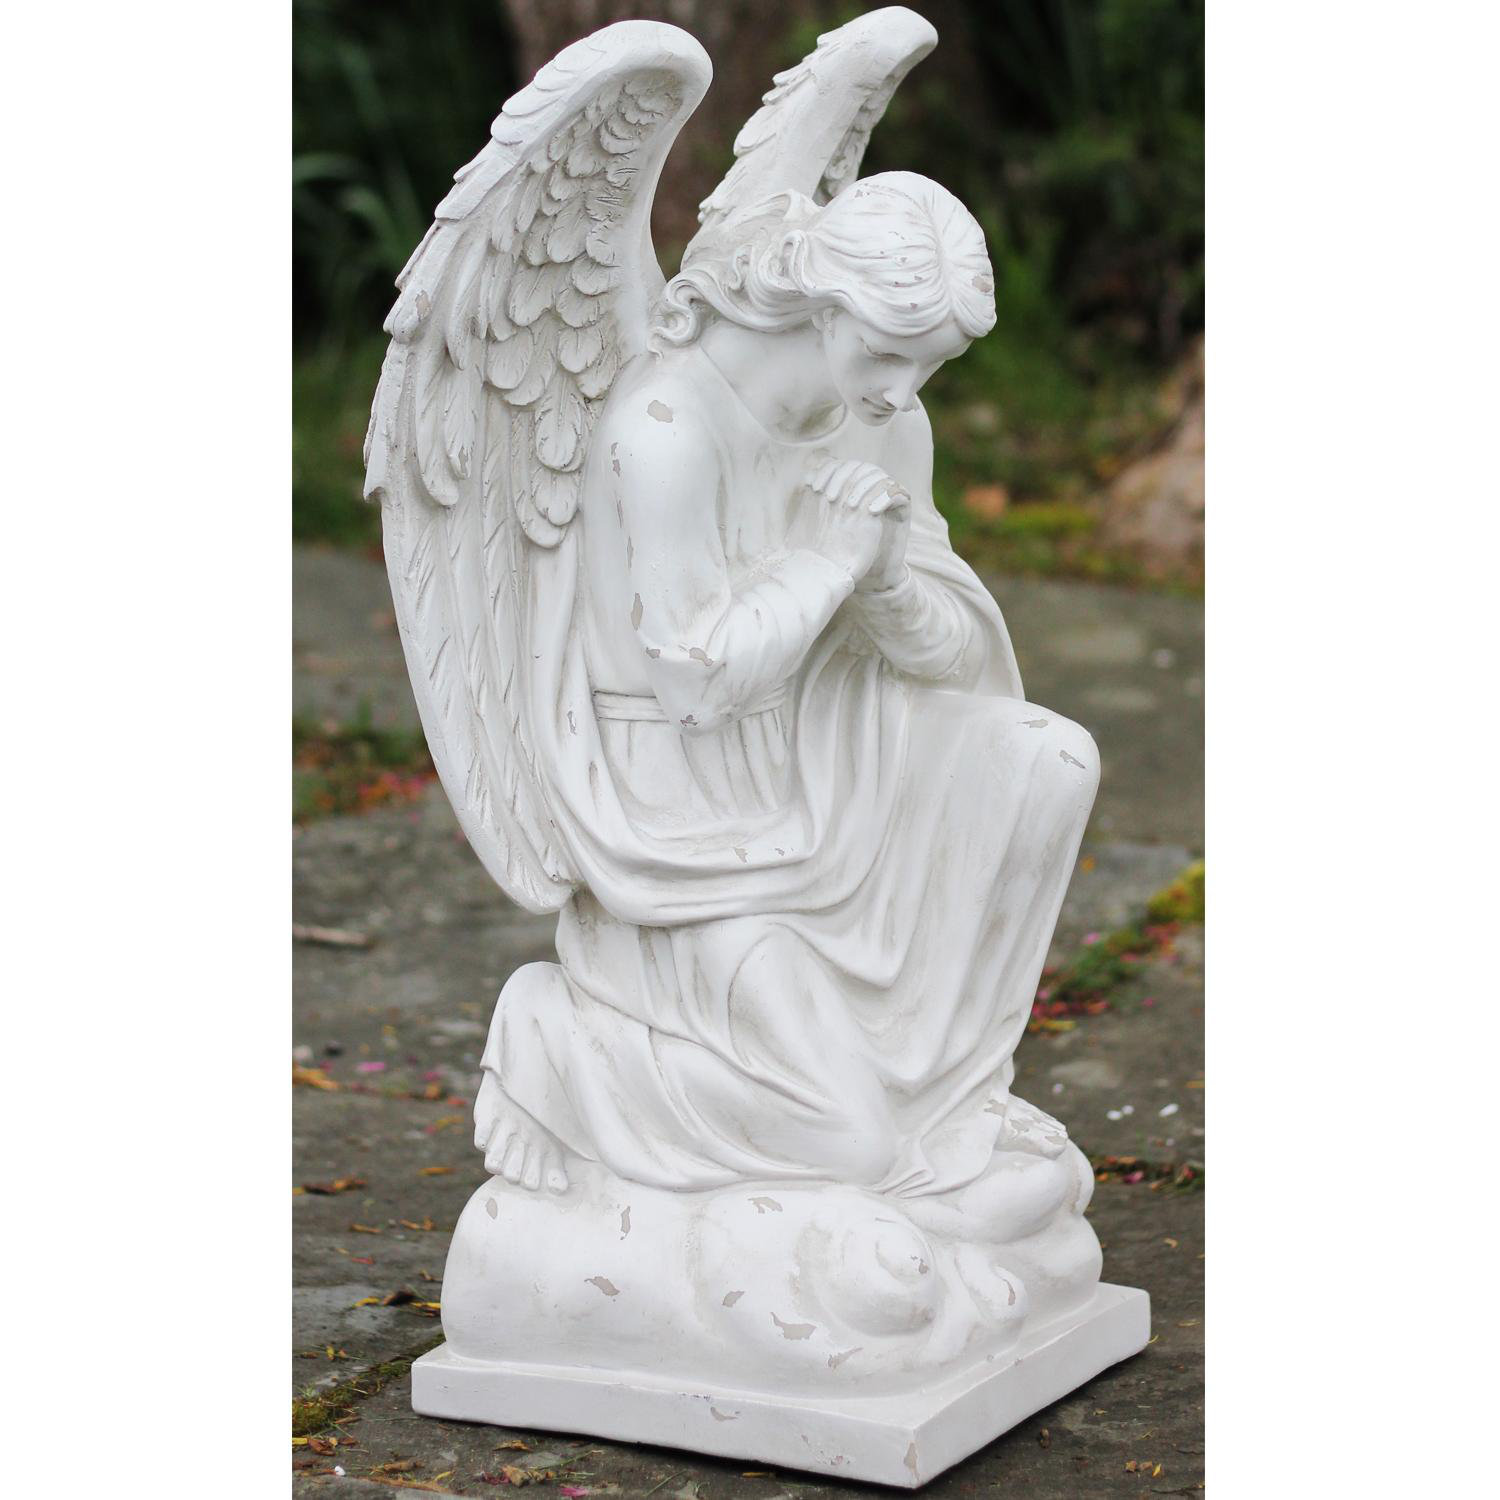 Northlight Distressed Kneeling Praying Angel Religious Outdoor